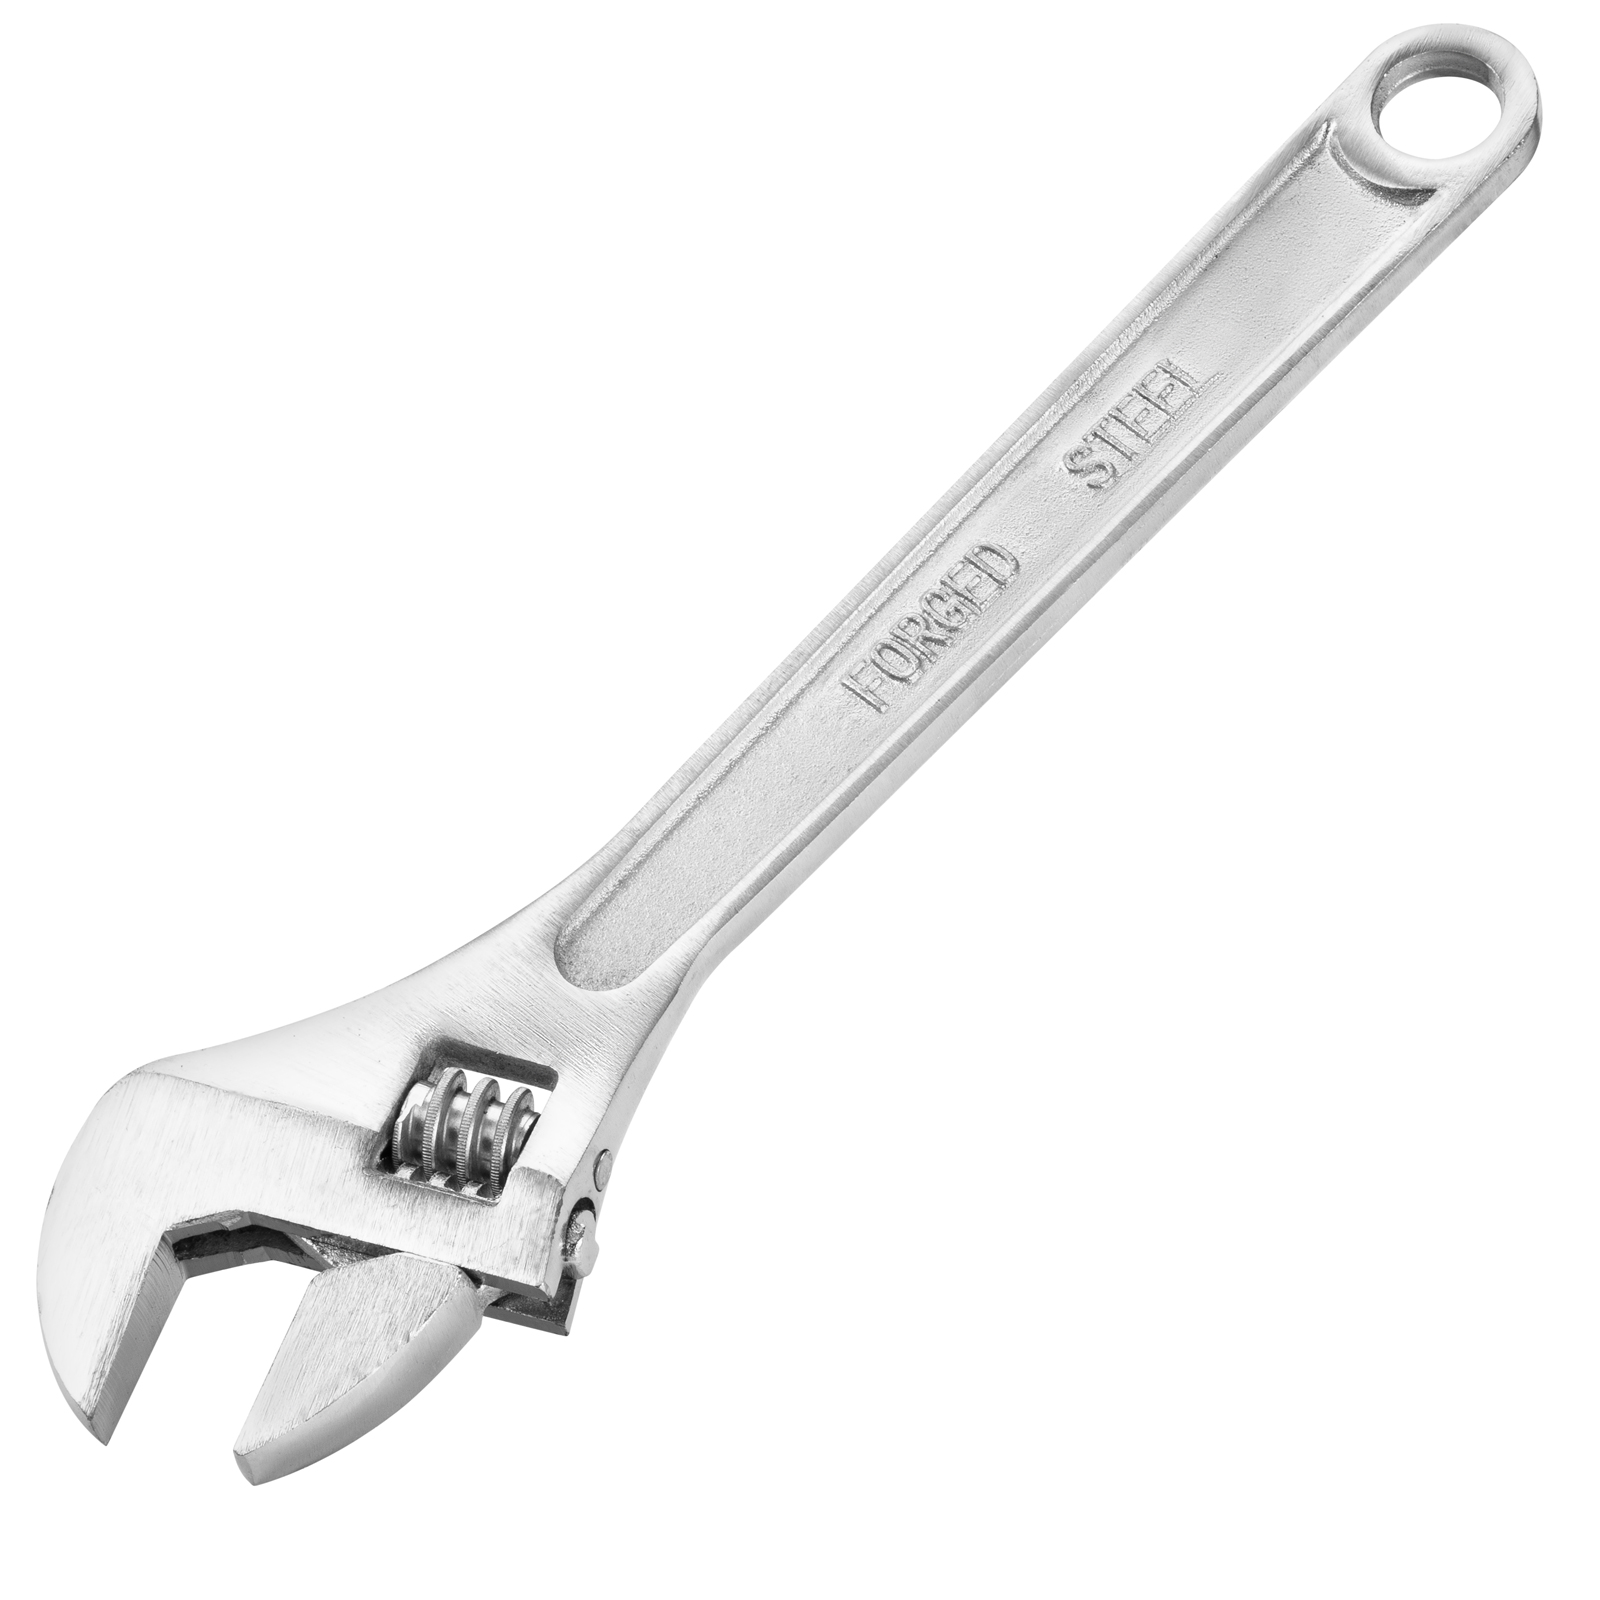 Ключ разводной SPARTA 375 мм хромированный 155405 ключ разводной sparta 375 мм хромированный 155405